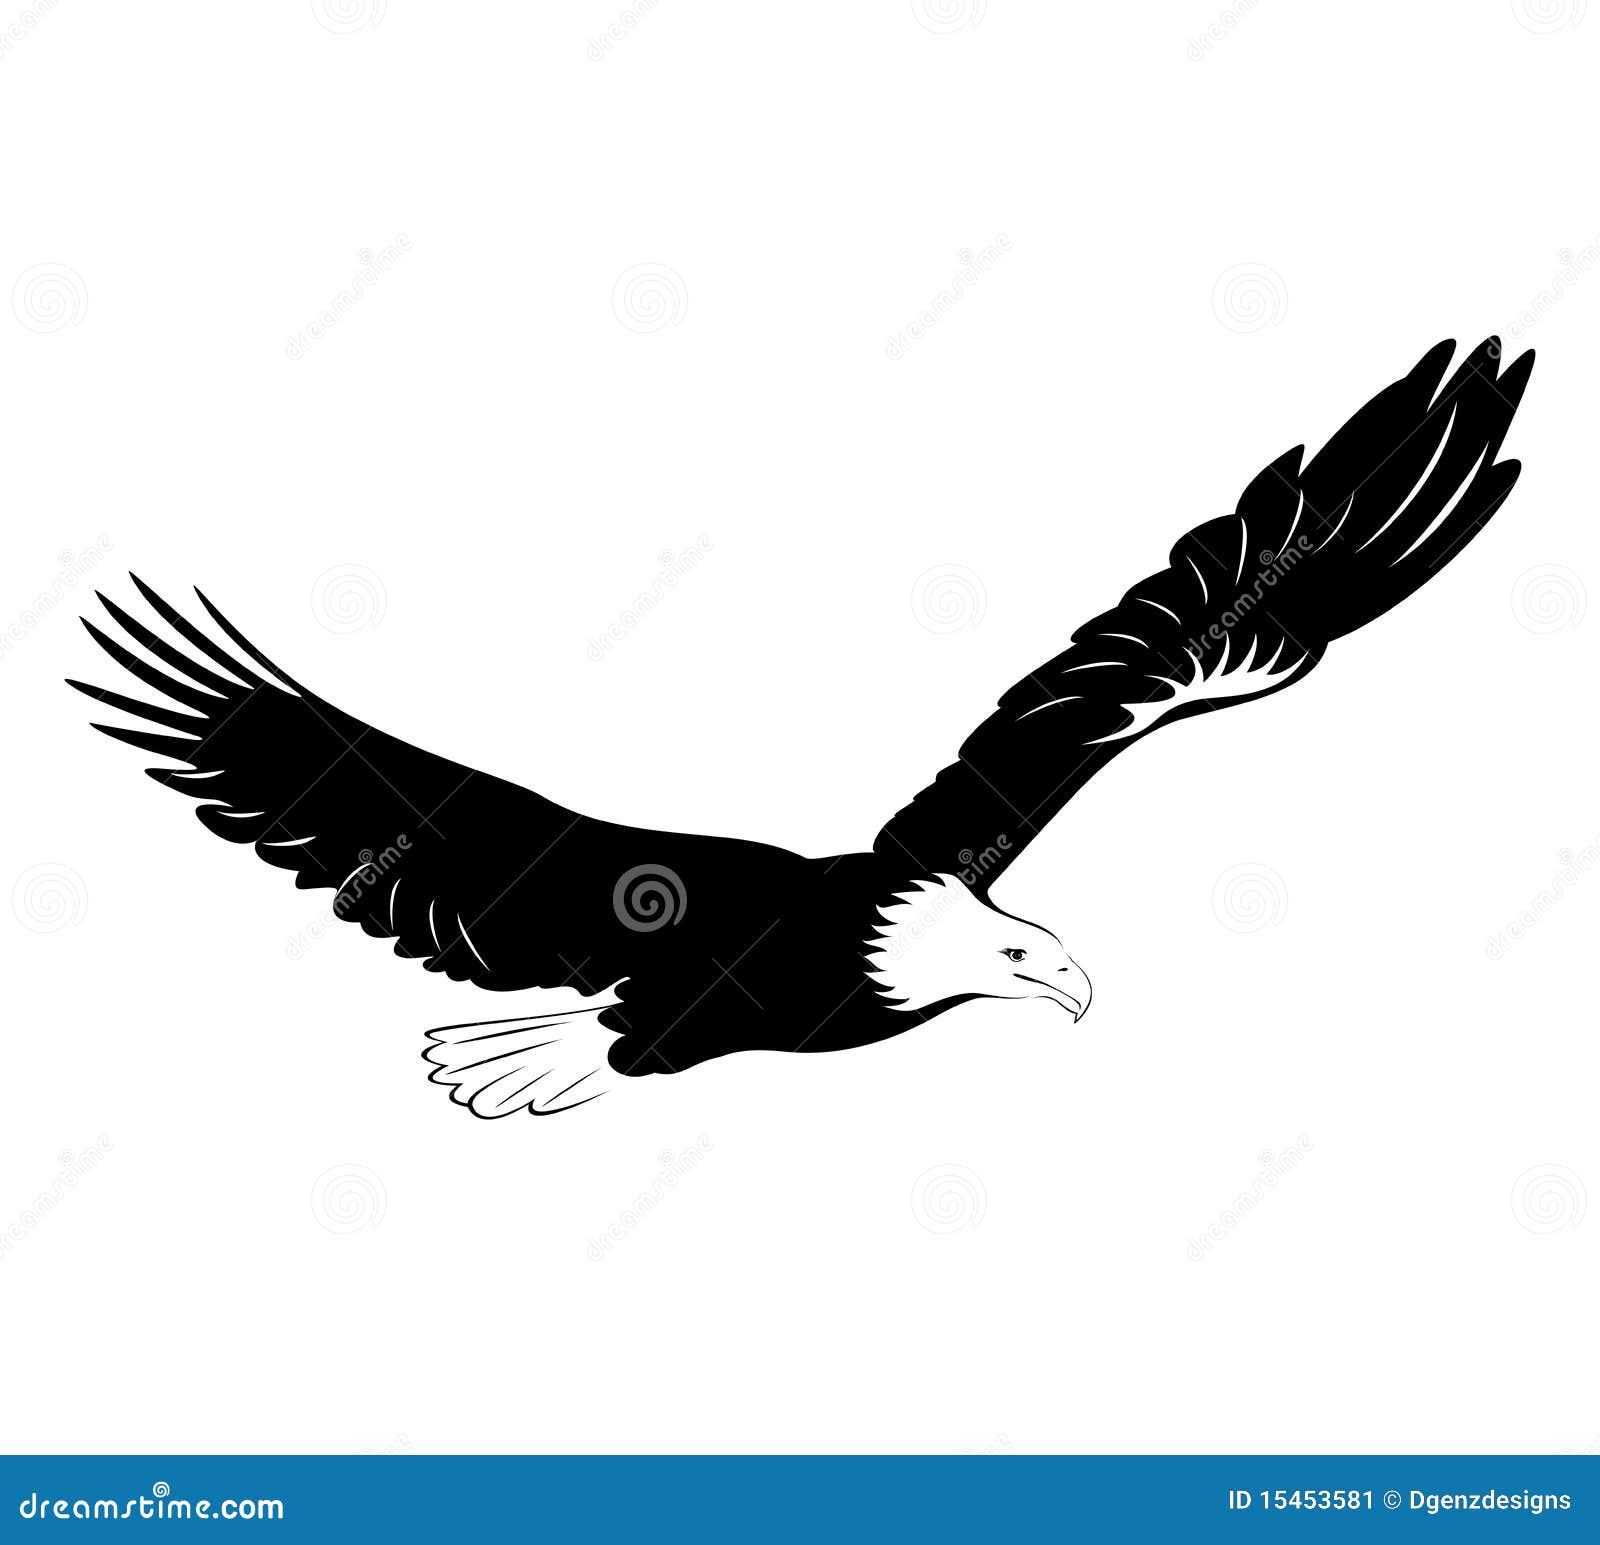 soaring eagle clipart black and white - photo #7